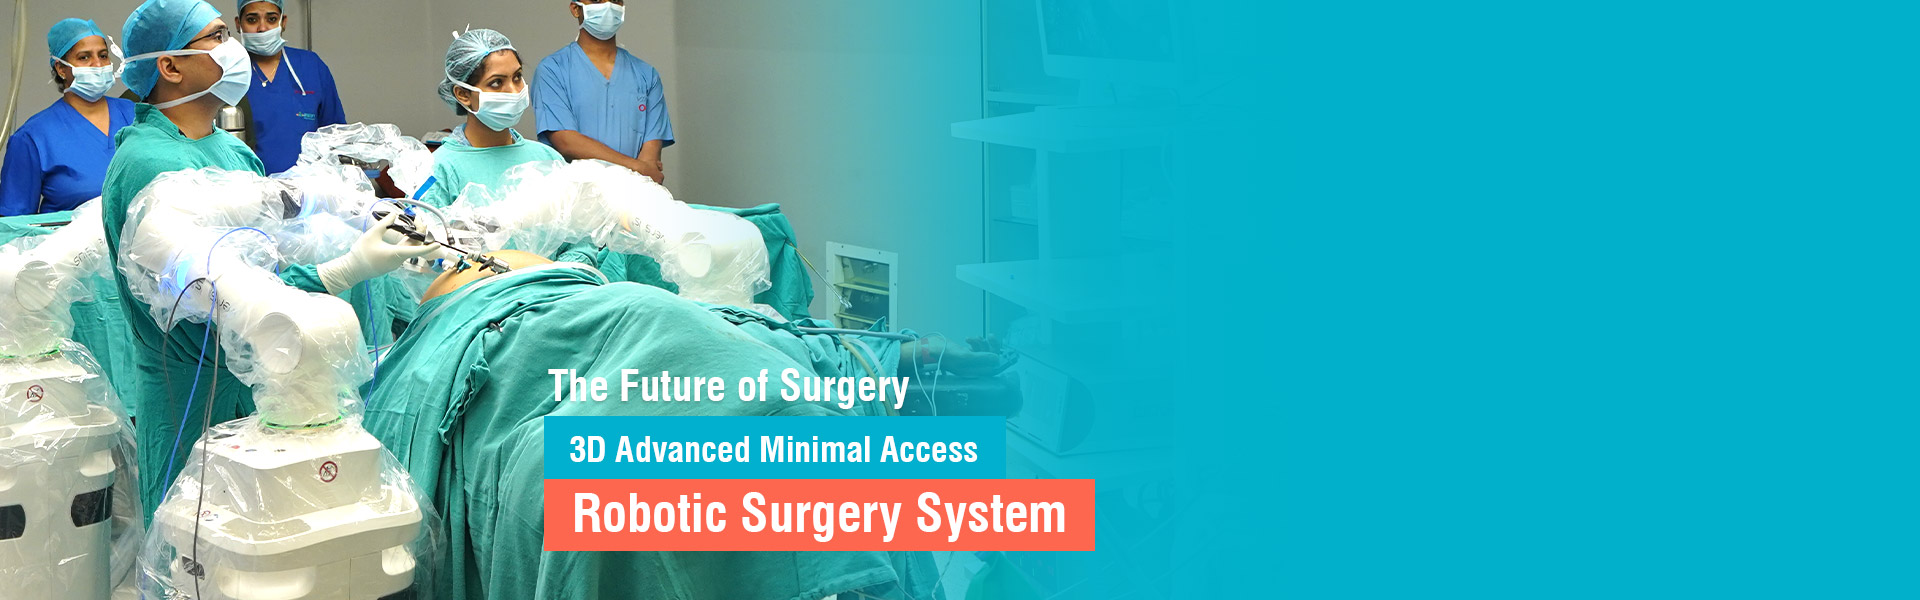 3D Advanced Minimal Access Robotic Surgery System